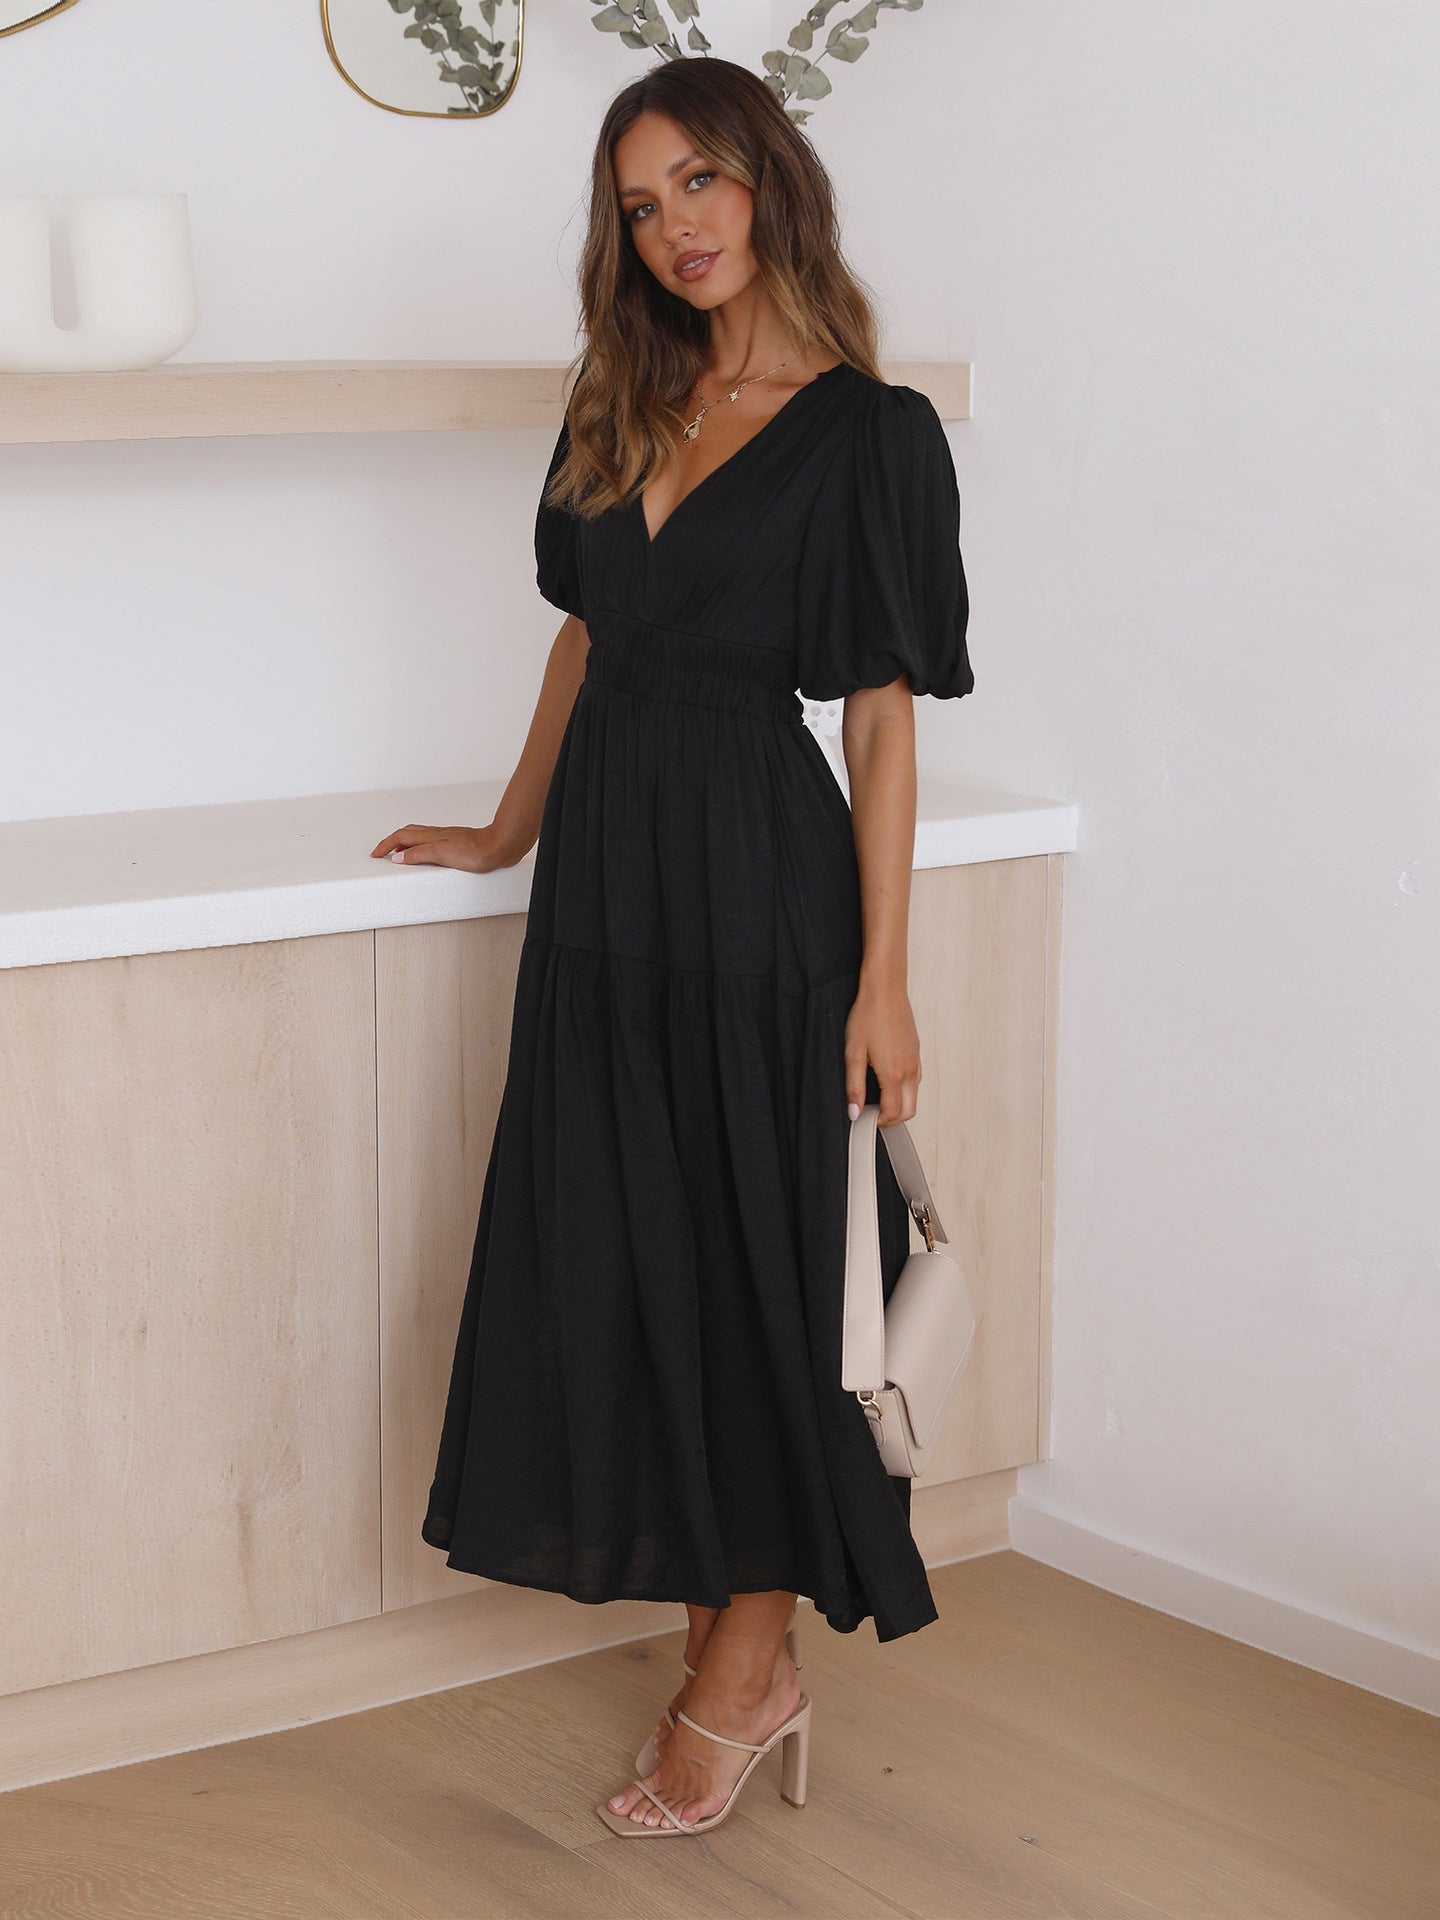 Summer V Neck Holiday Dresses for Women-Dresses-Black-S-Free Shipping Leatheretro